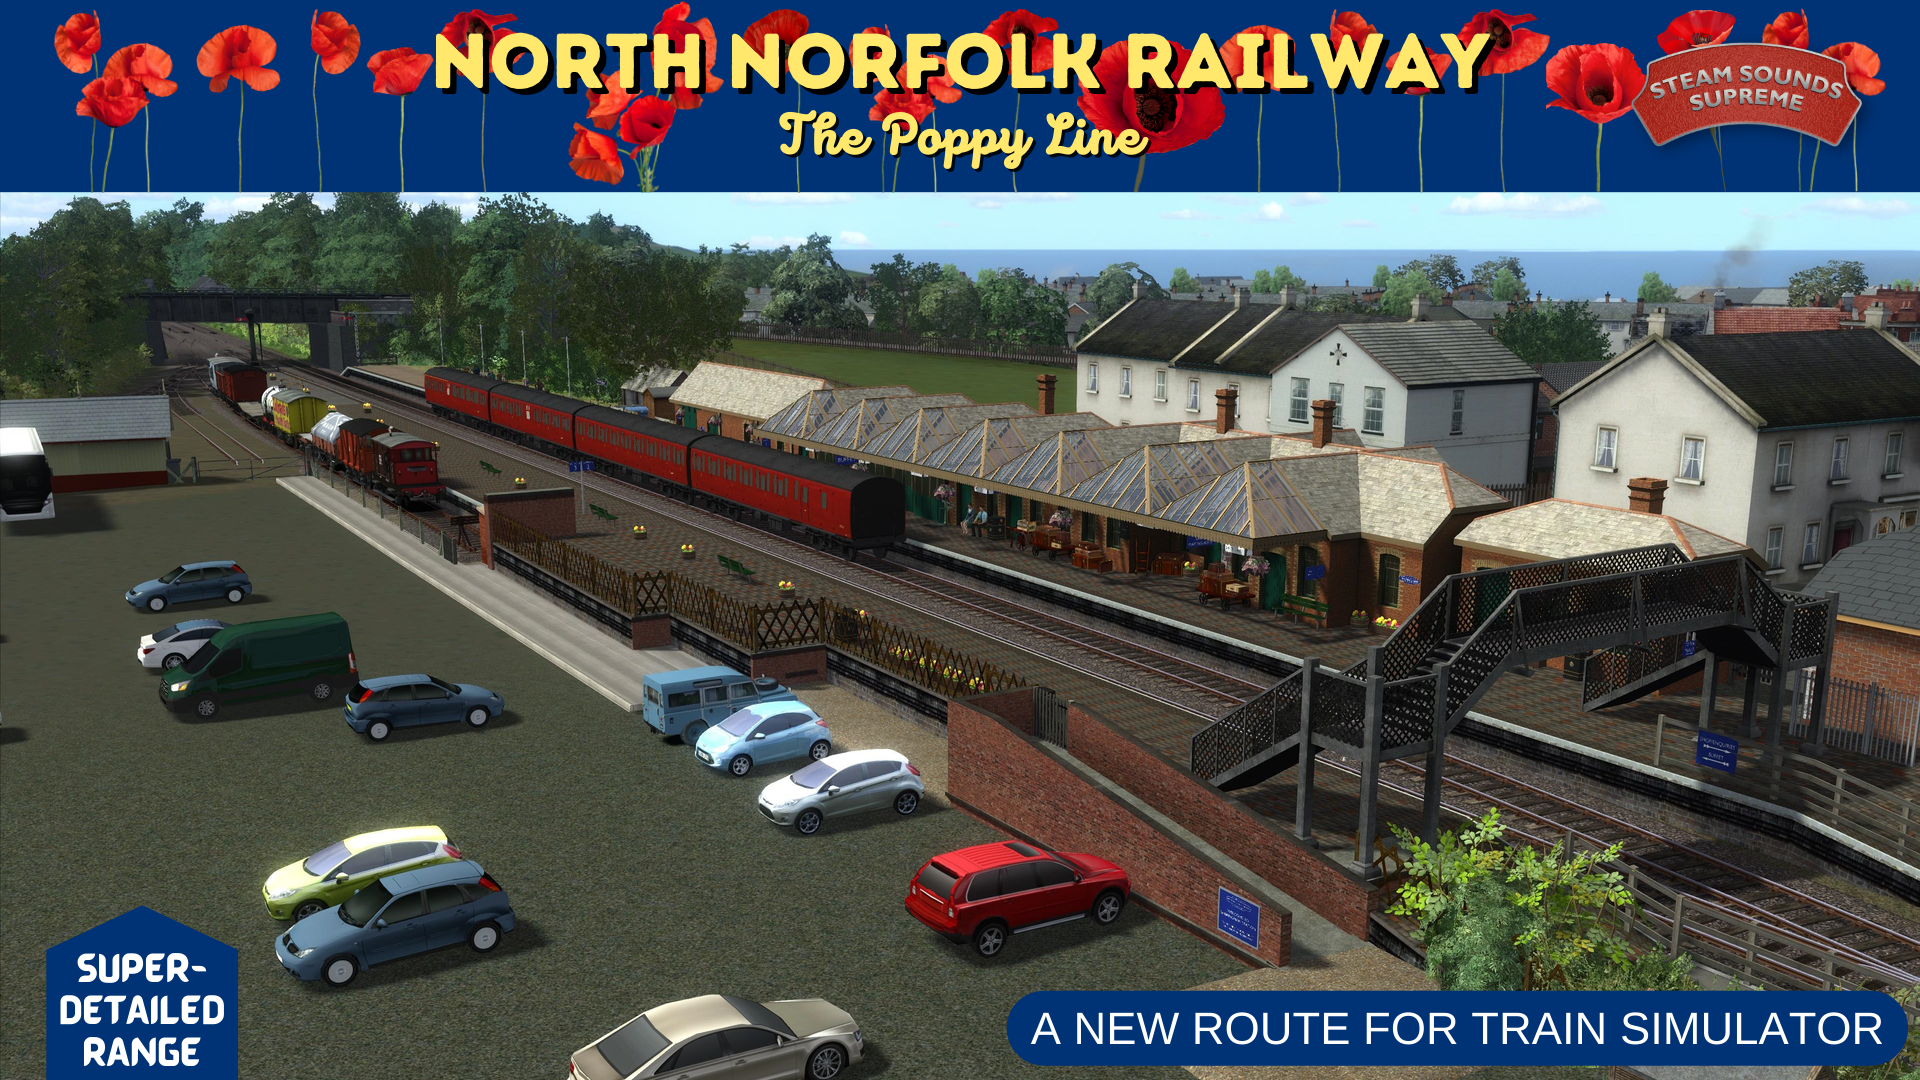 NNR for Train Simulator Image30.png